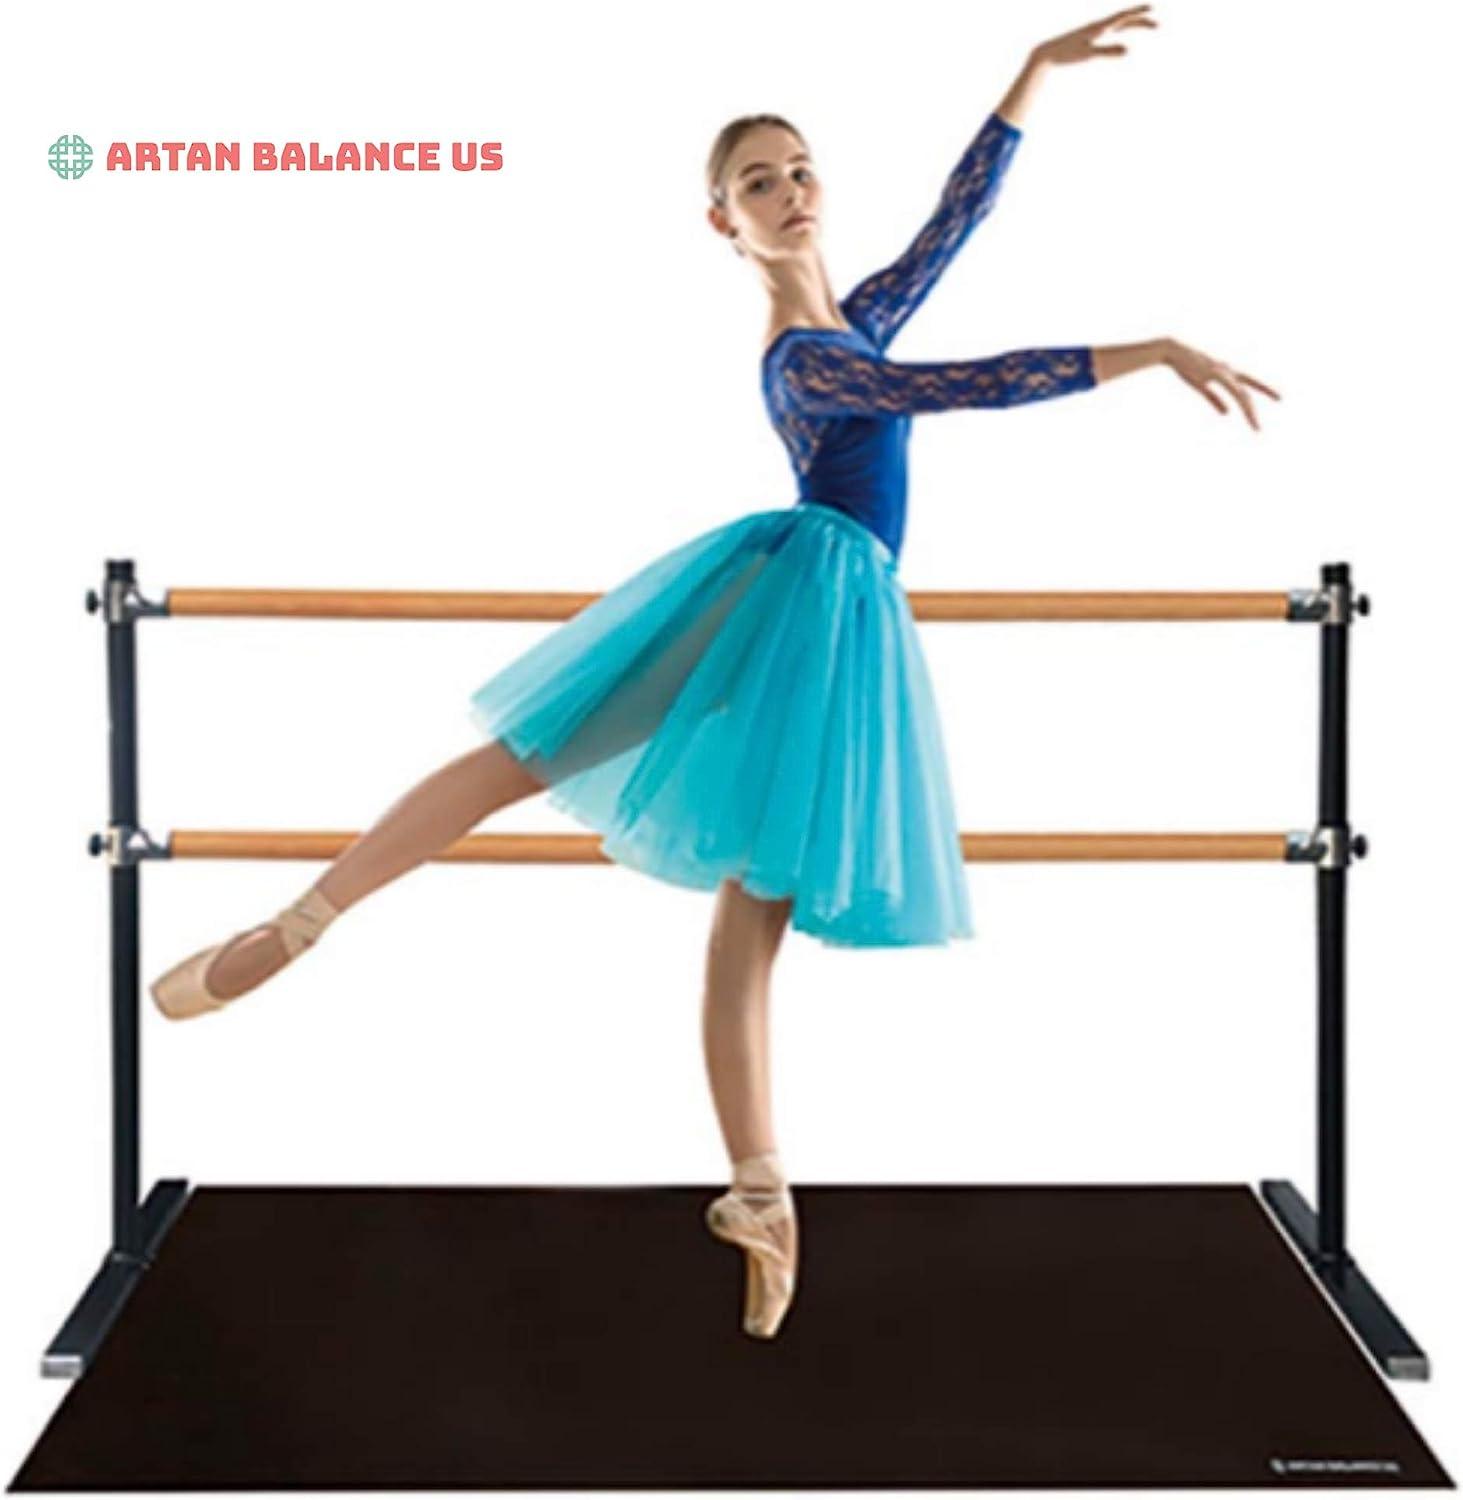 Artan Balance Dance Floor for Home, Studio, Stage Performance, or